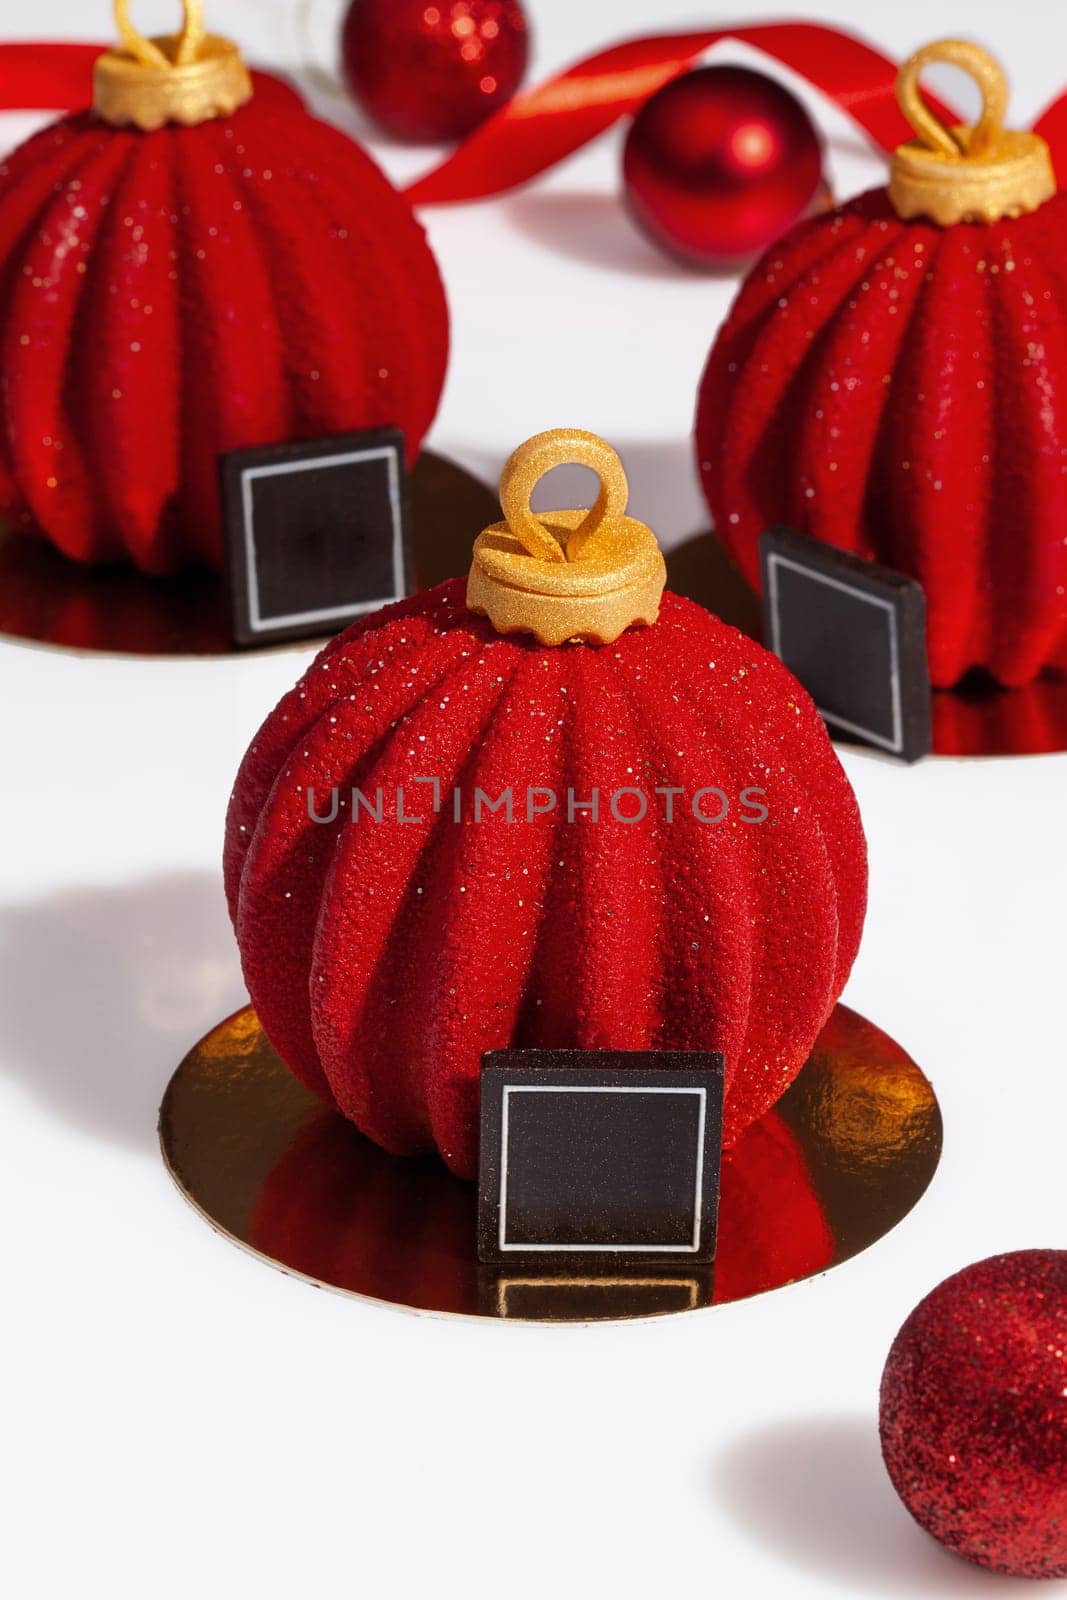 Handmade desserts in shape of red Christmas balls on golden cardboard by nazarovsergey